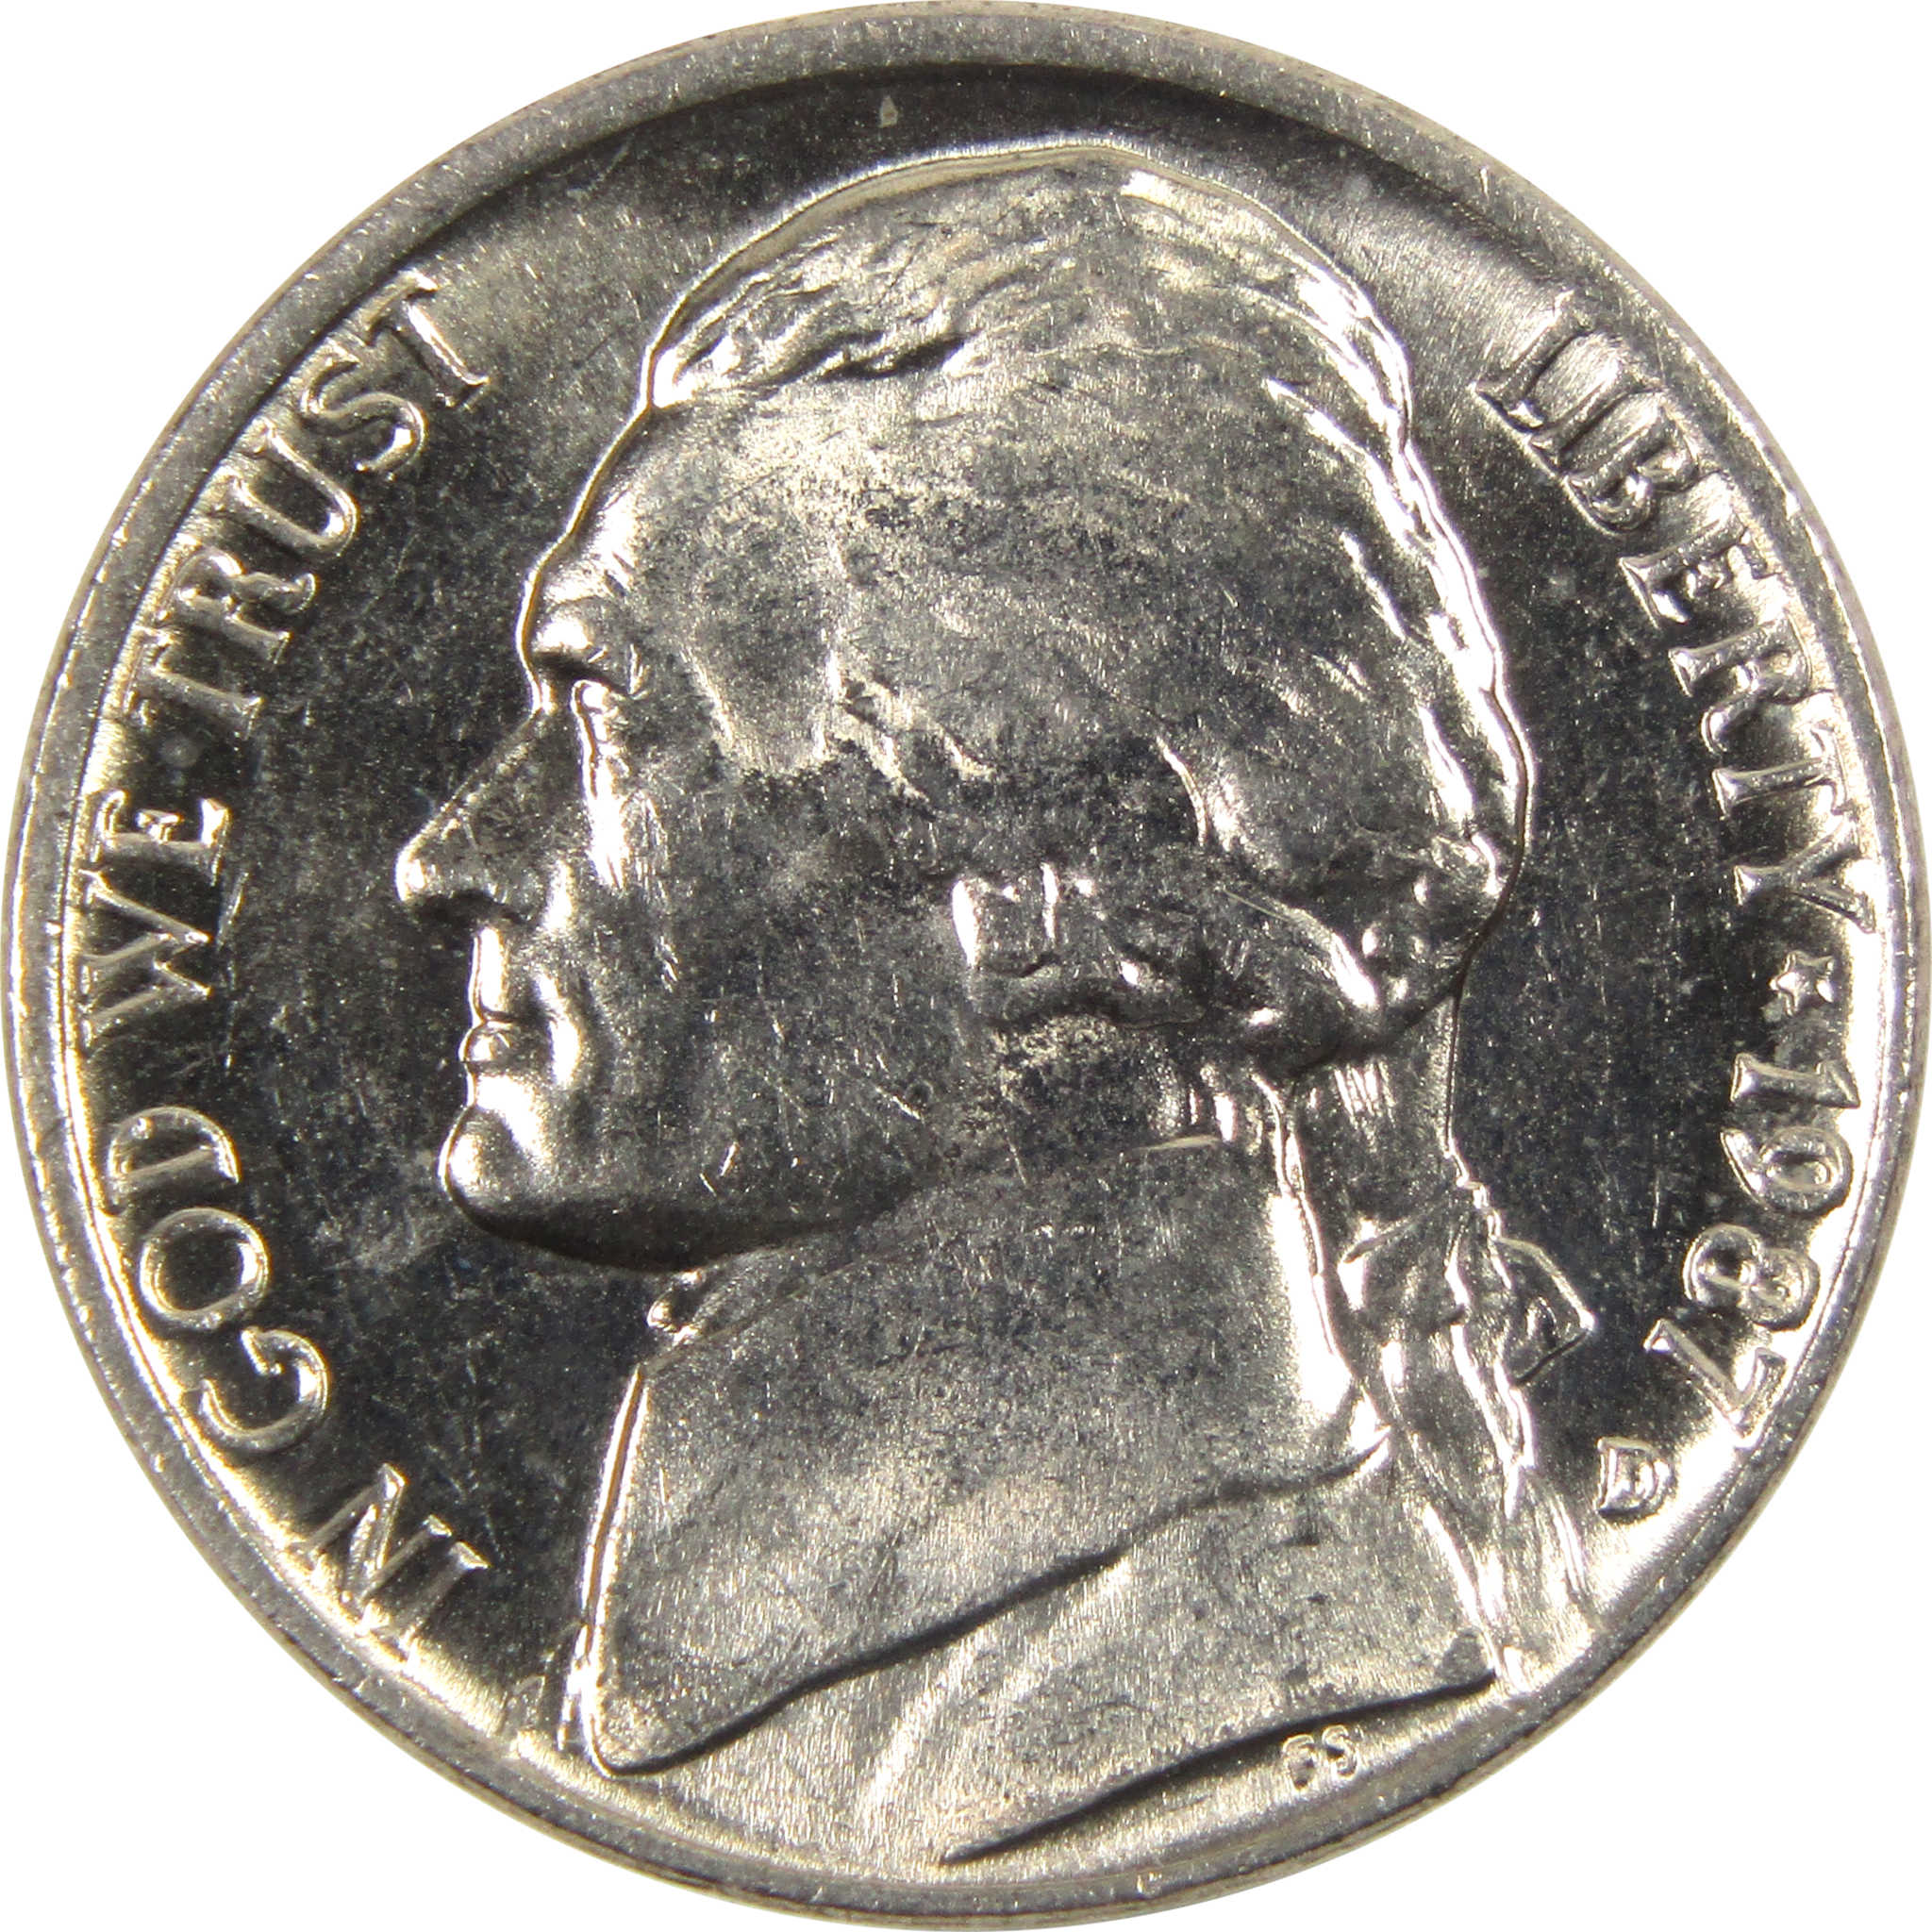 1987 D Jefferson Nickel BU Uncirculated 5c Coin